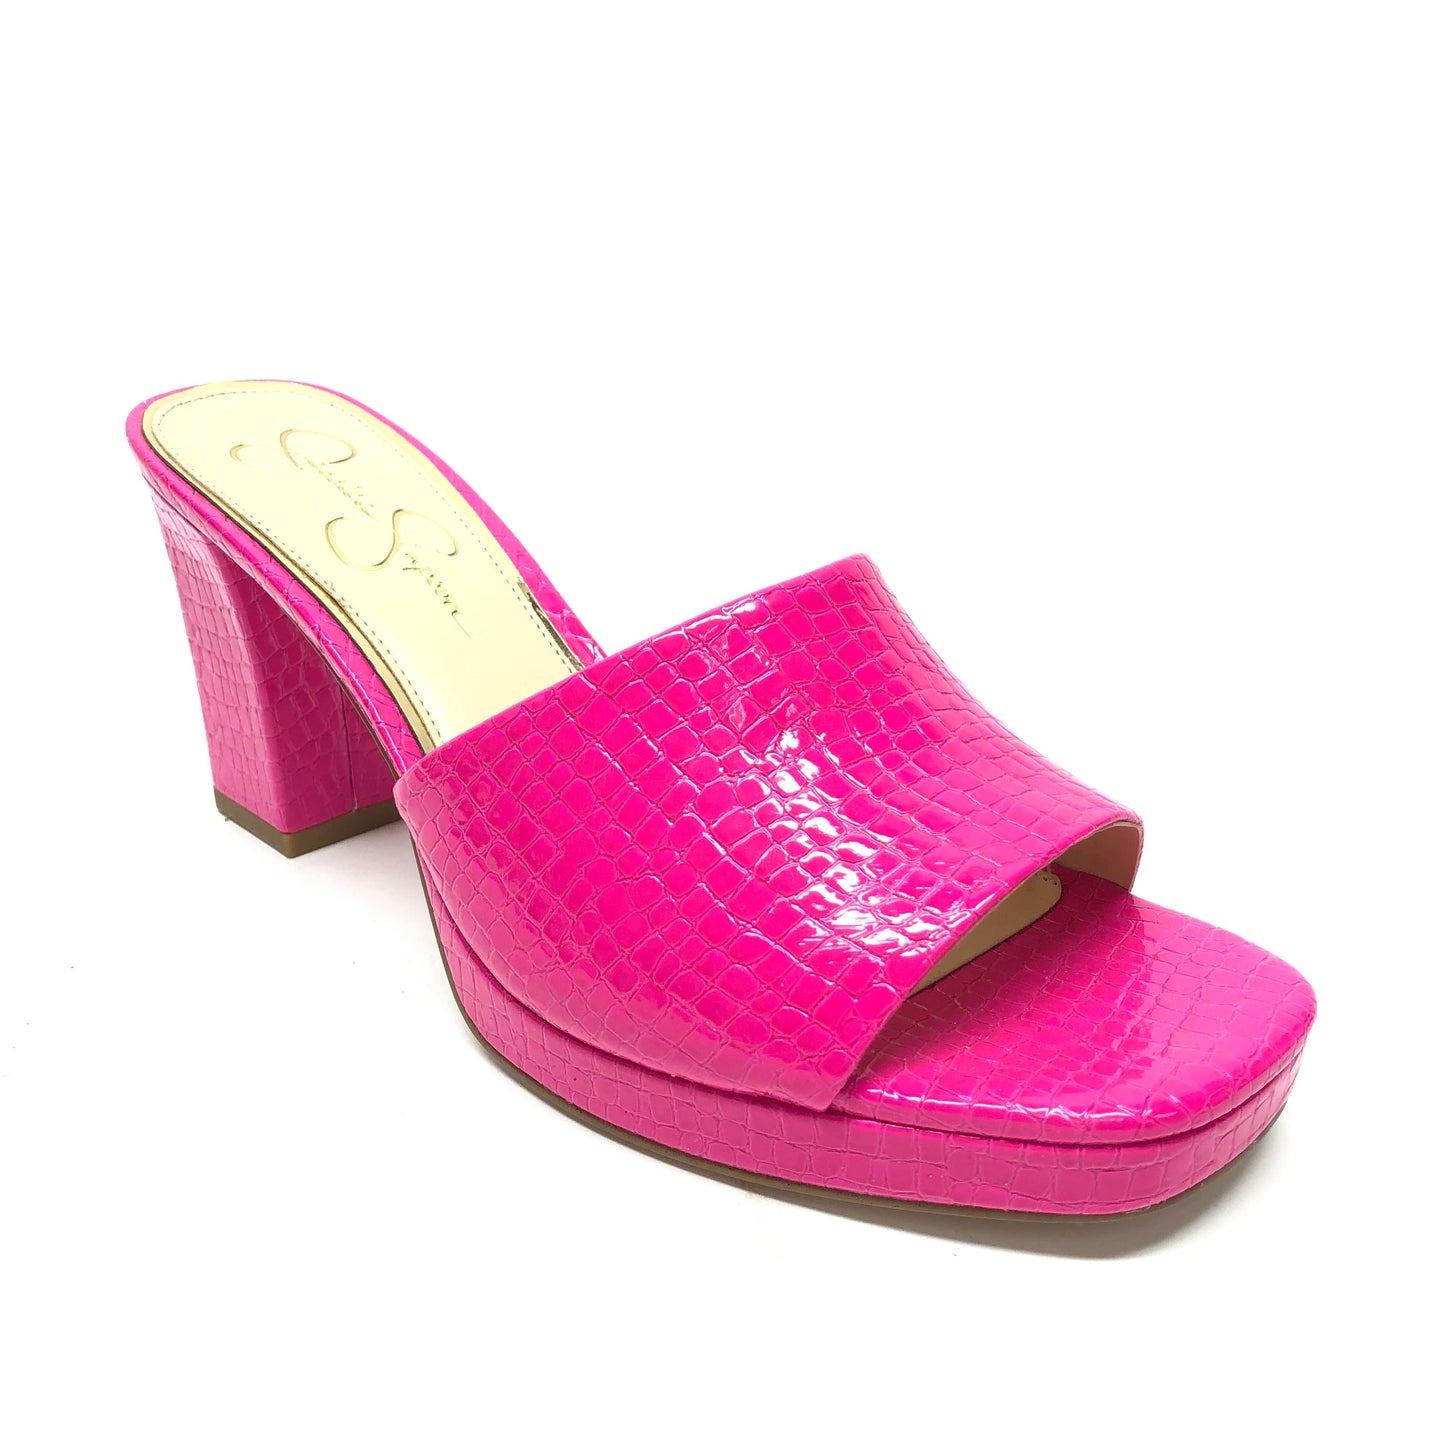 Pink Sandals Heels Block Jessica Simpson, Size 11